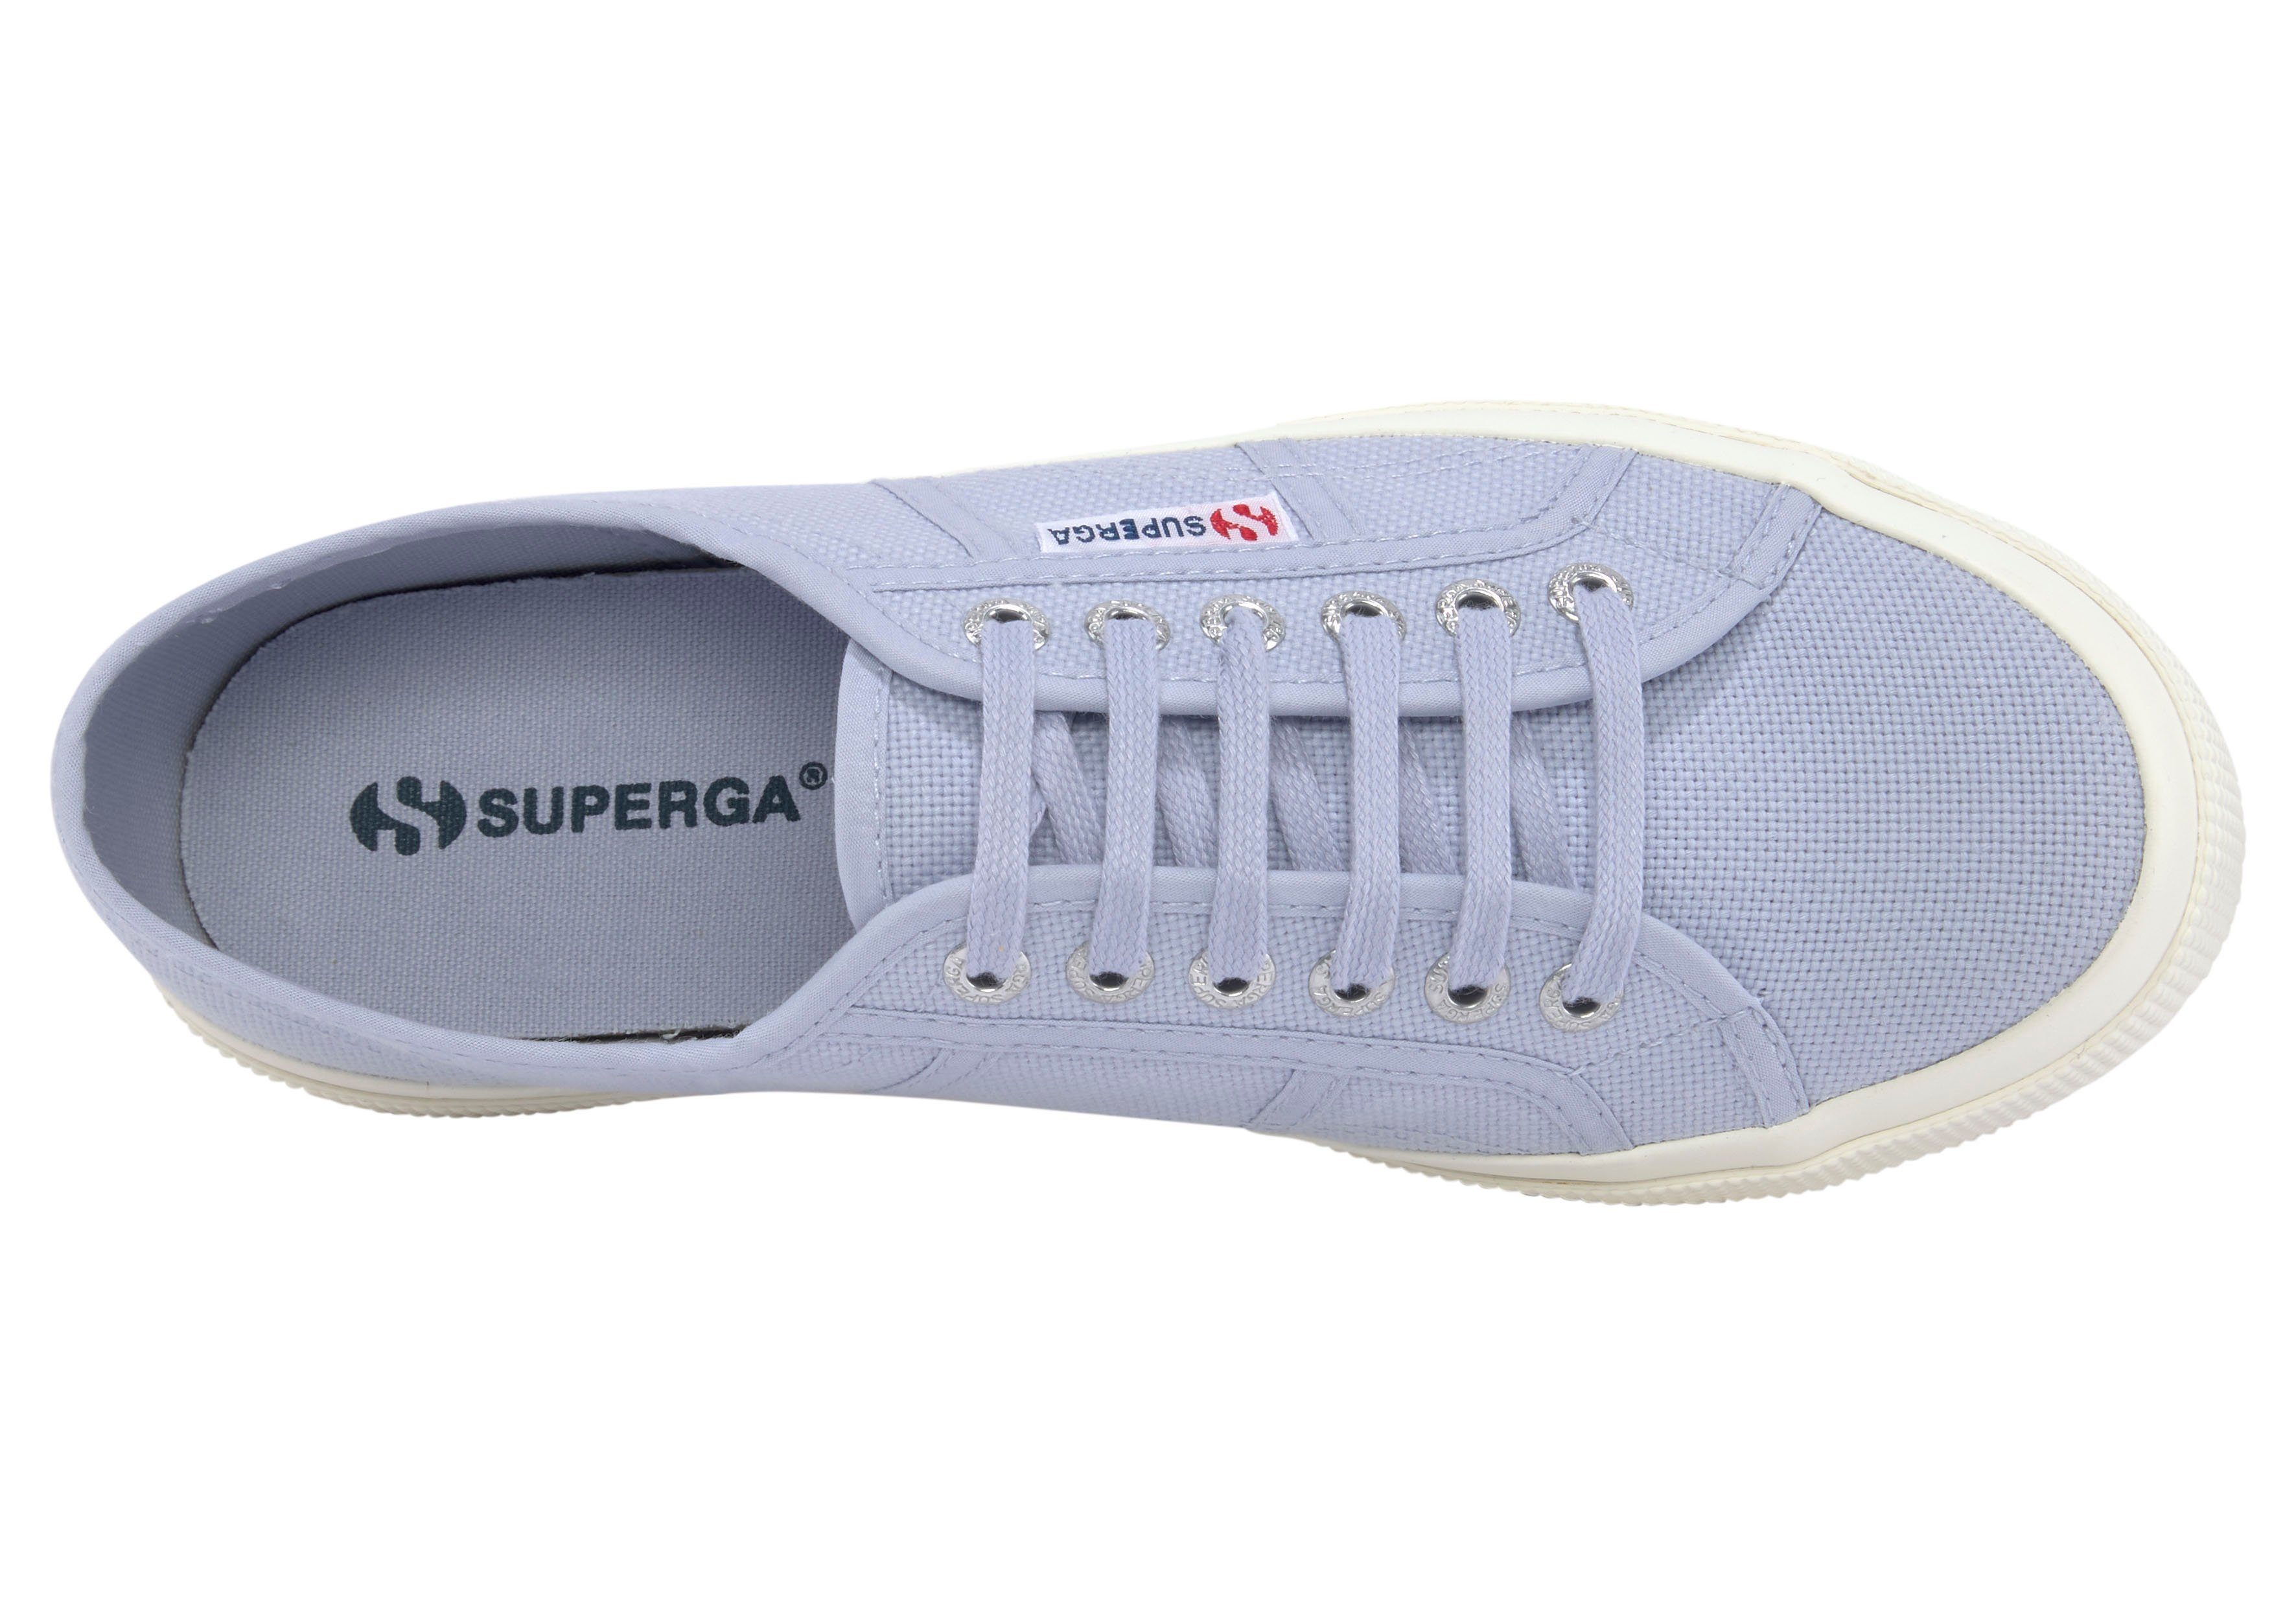 Superga Cotu Classic Sneaker Canvas-Obermaterial mit flieder klassischem